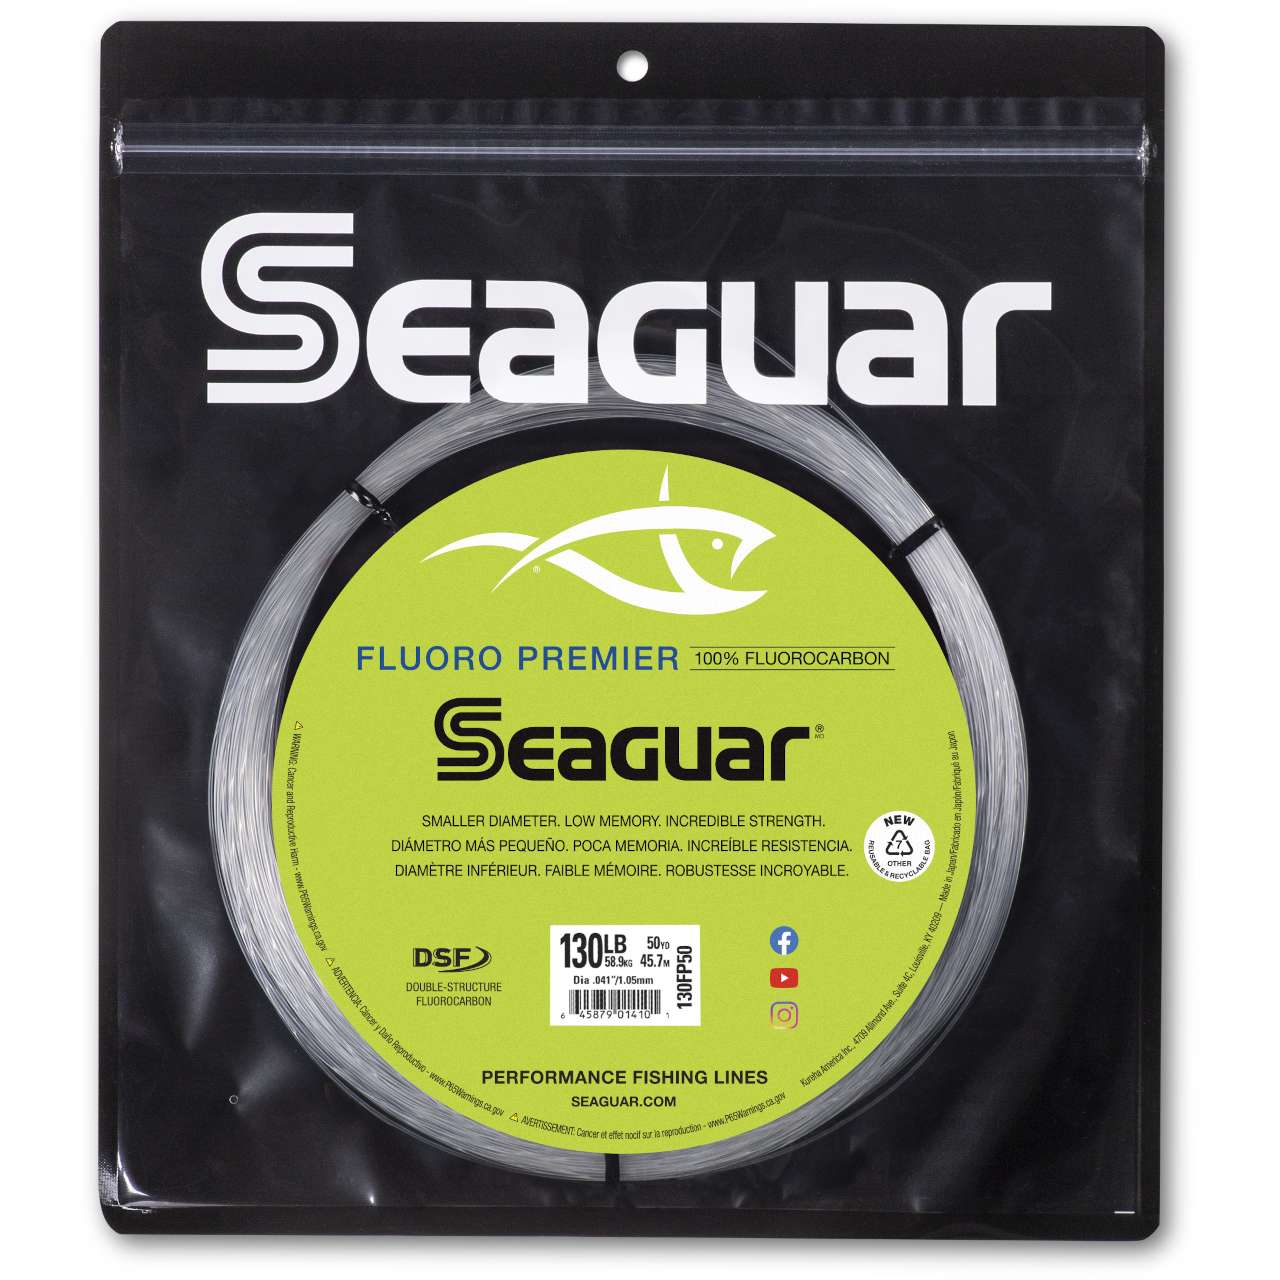 Test Seaguar Fluoro Premier Fluorocarbon Leader Fishing Line 50 Yards Select Lb 